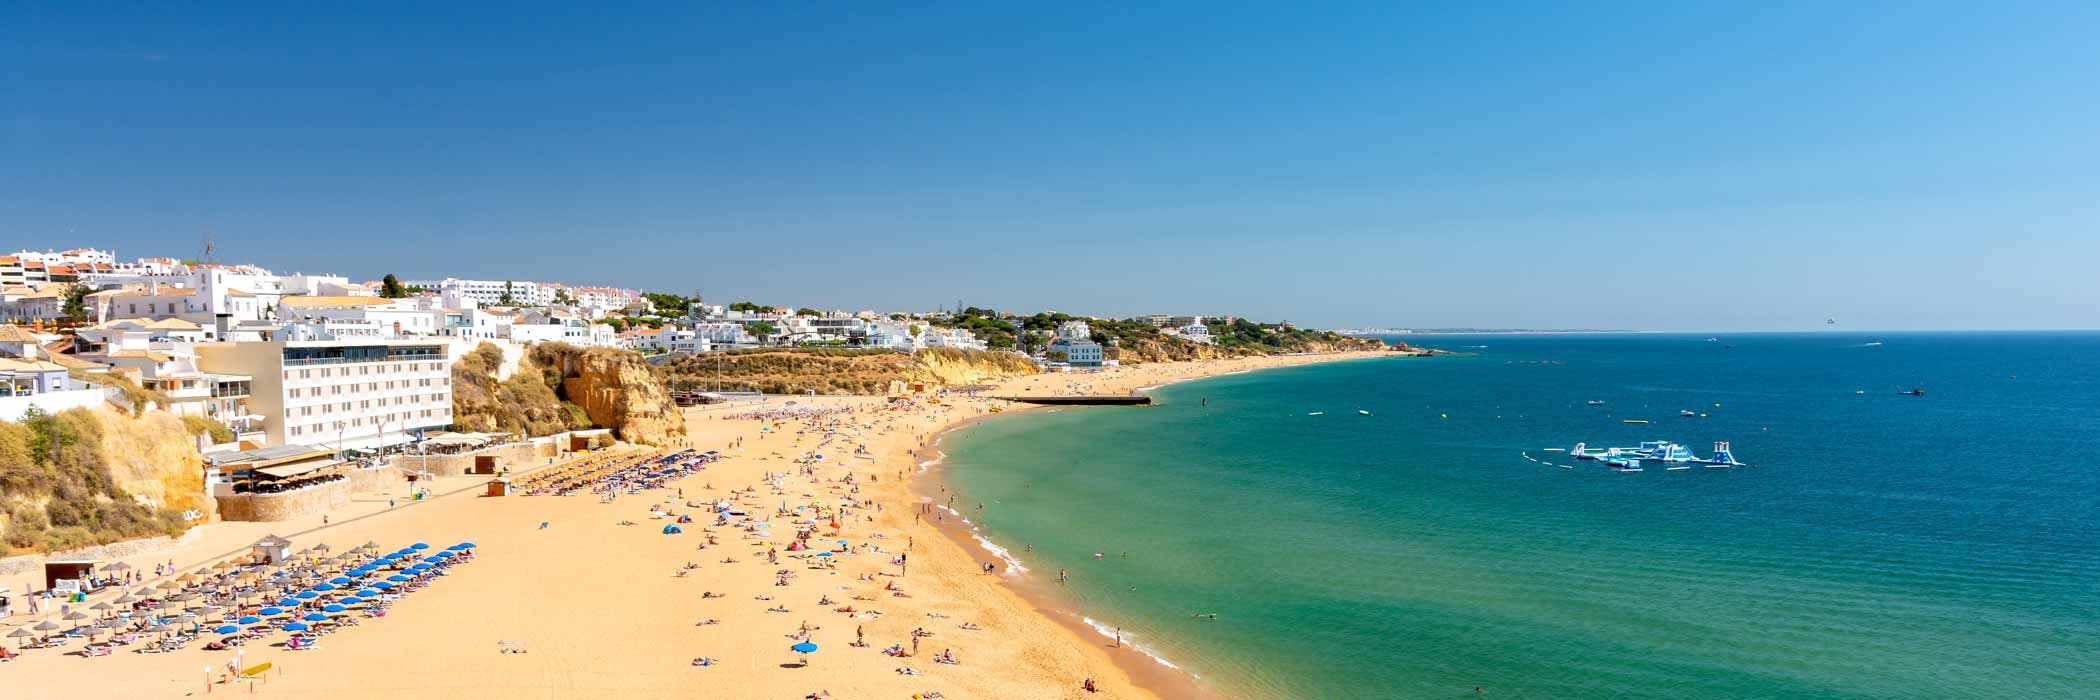 Albufeira Beach in the Algarve, Portugal